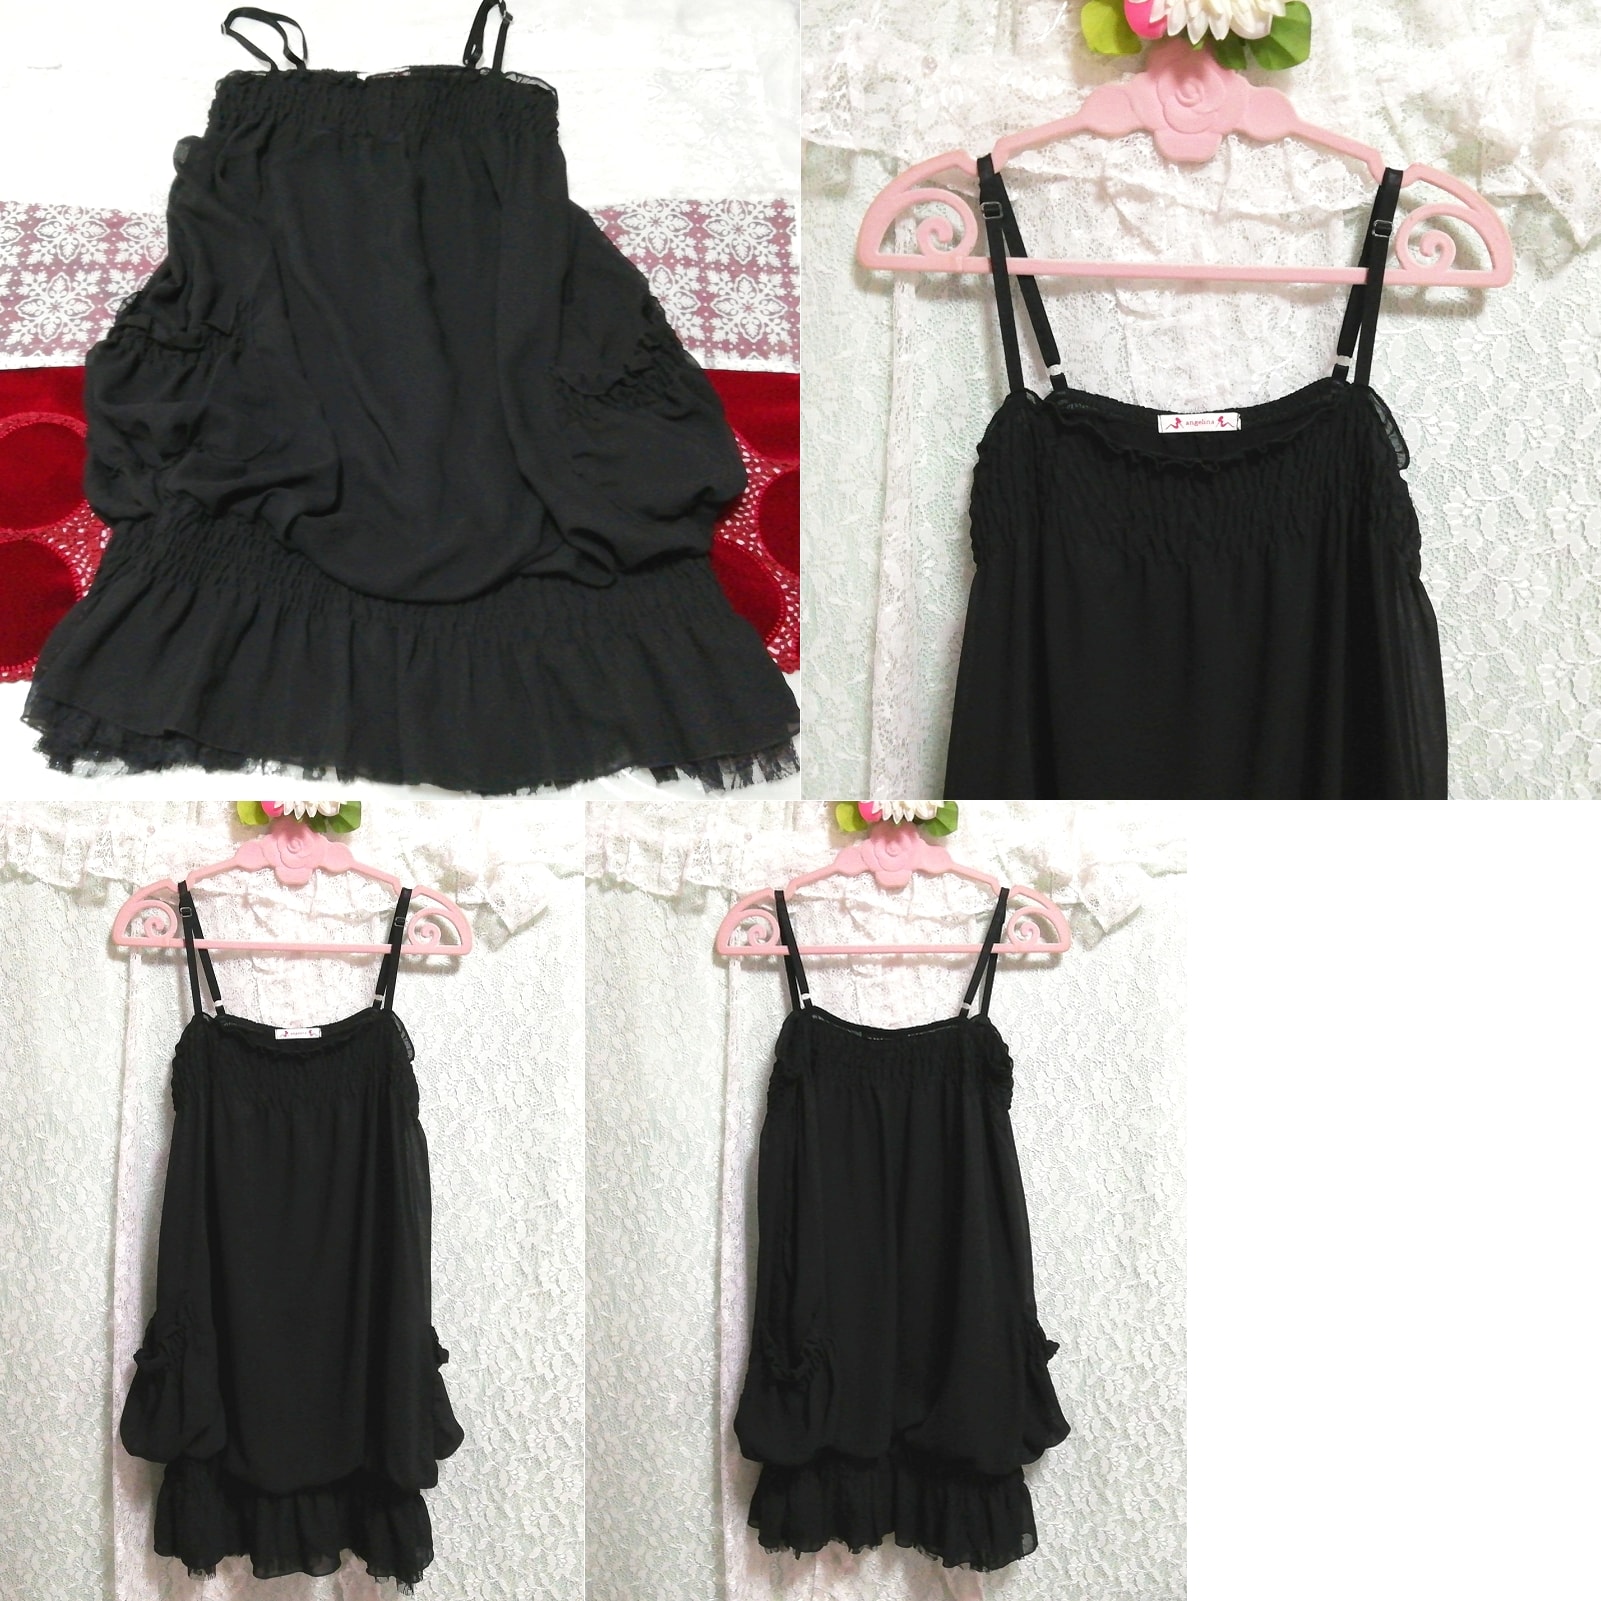 Black chiffon lace pocket negligee nightgown miniskirt camisole dress, fashion, ladies' fashion, camisole